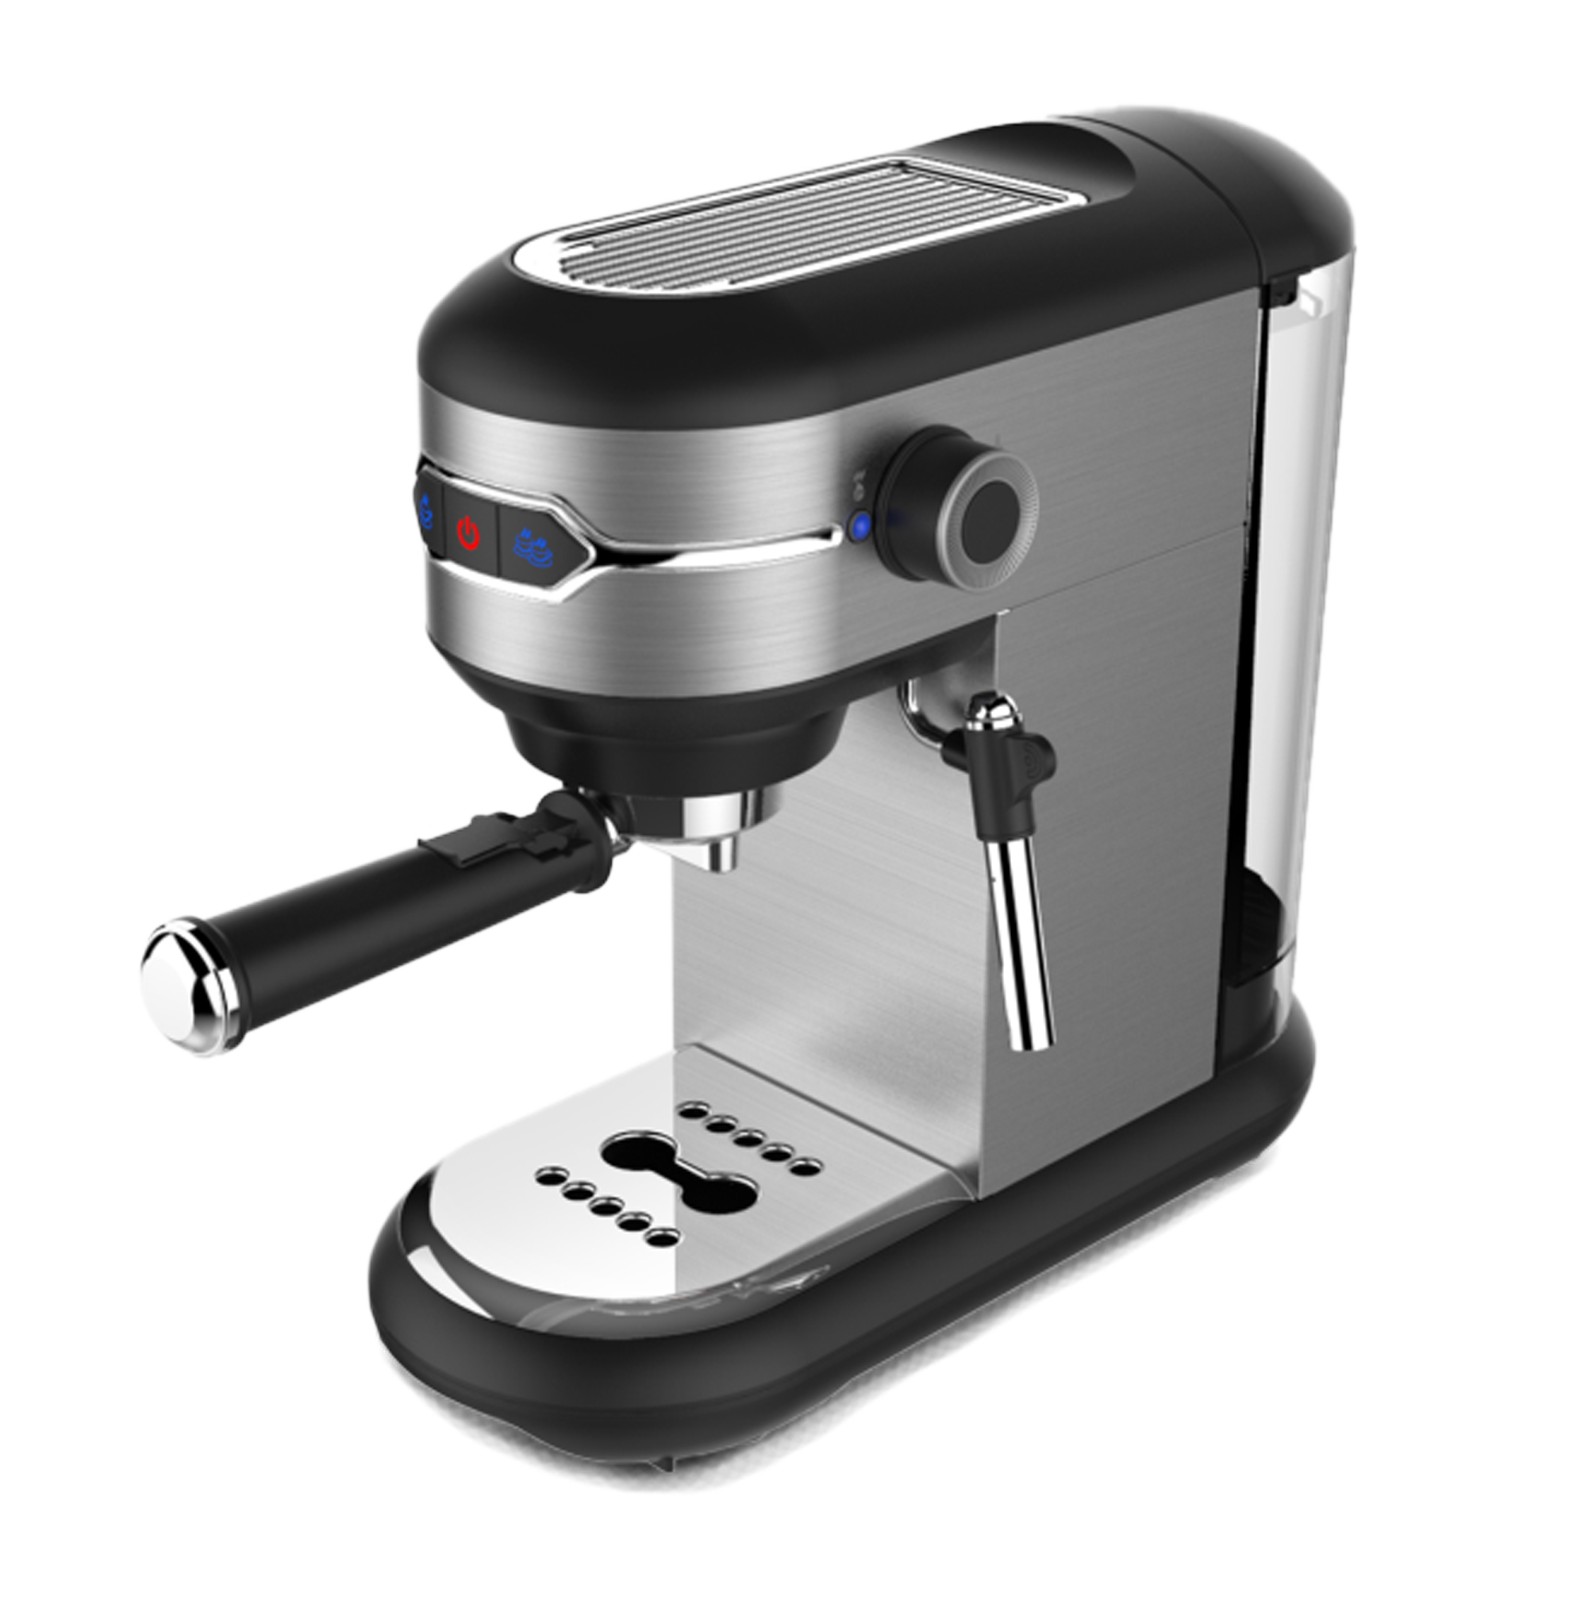 Smart drip coffee machine with WiFi